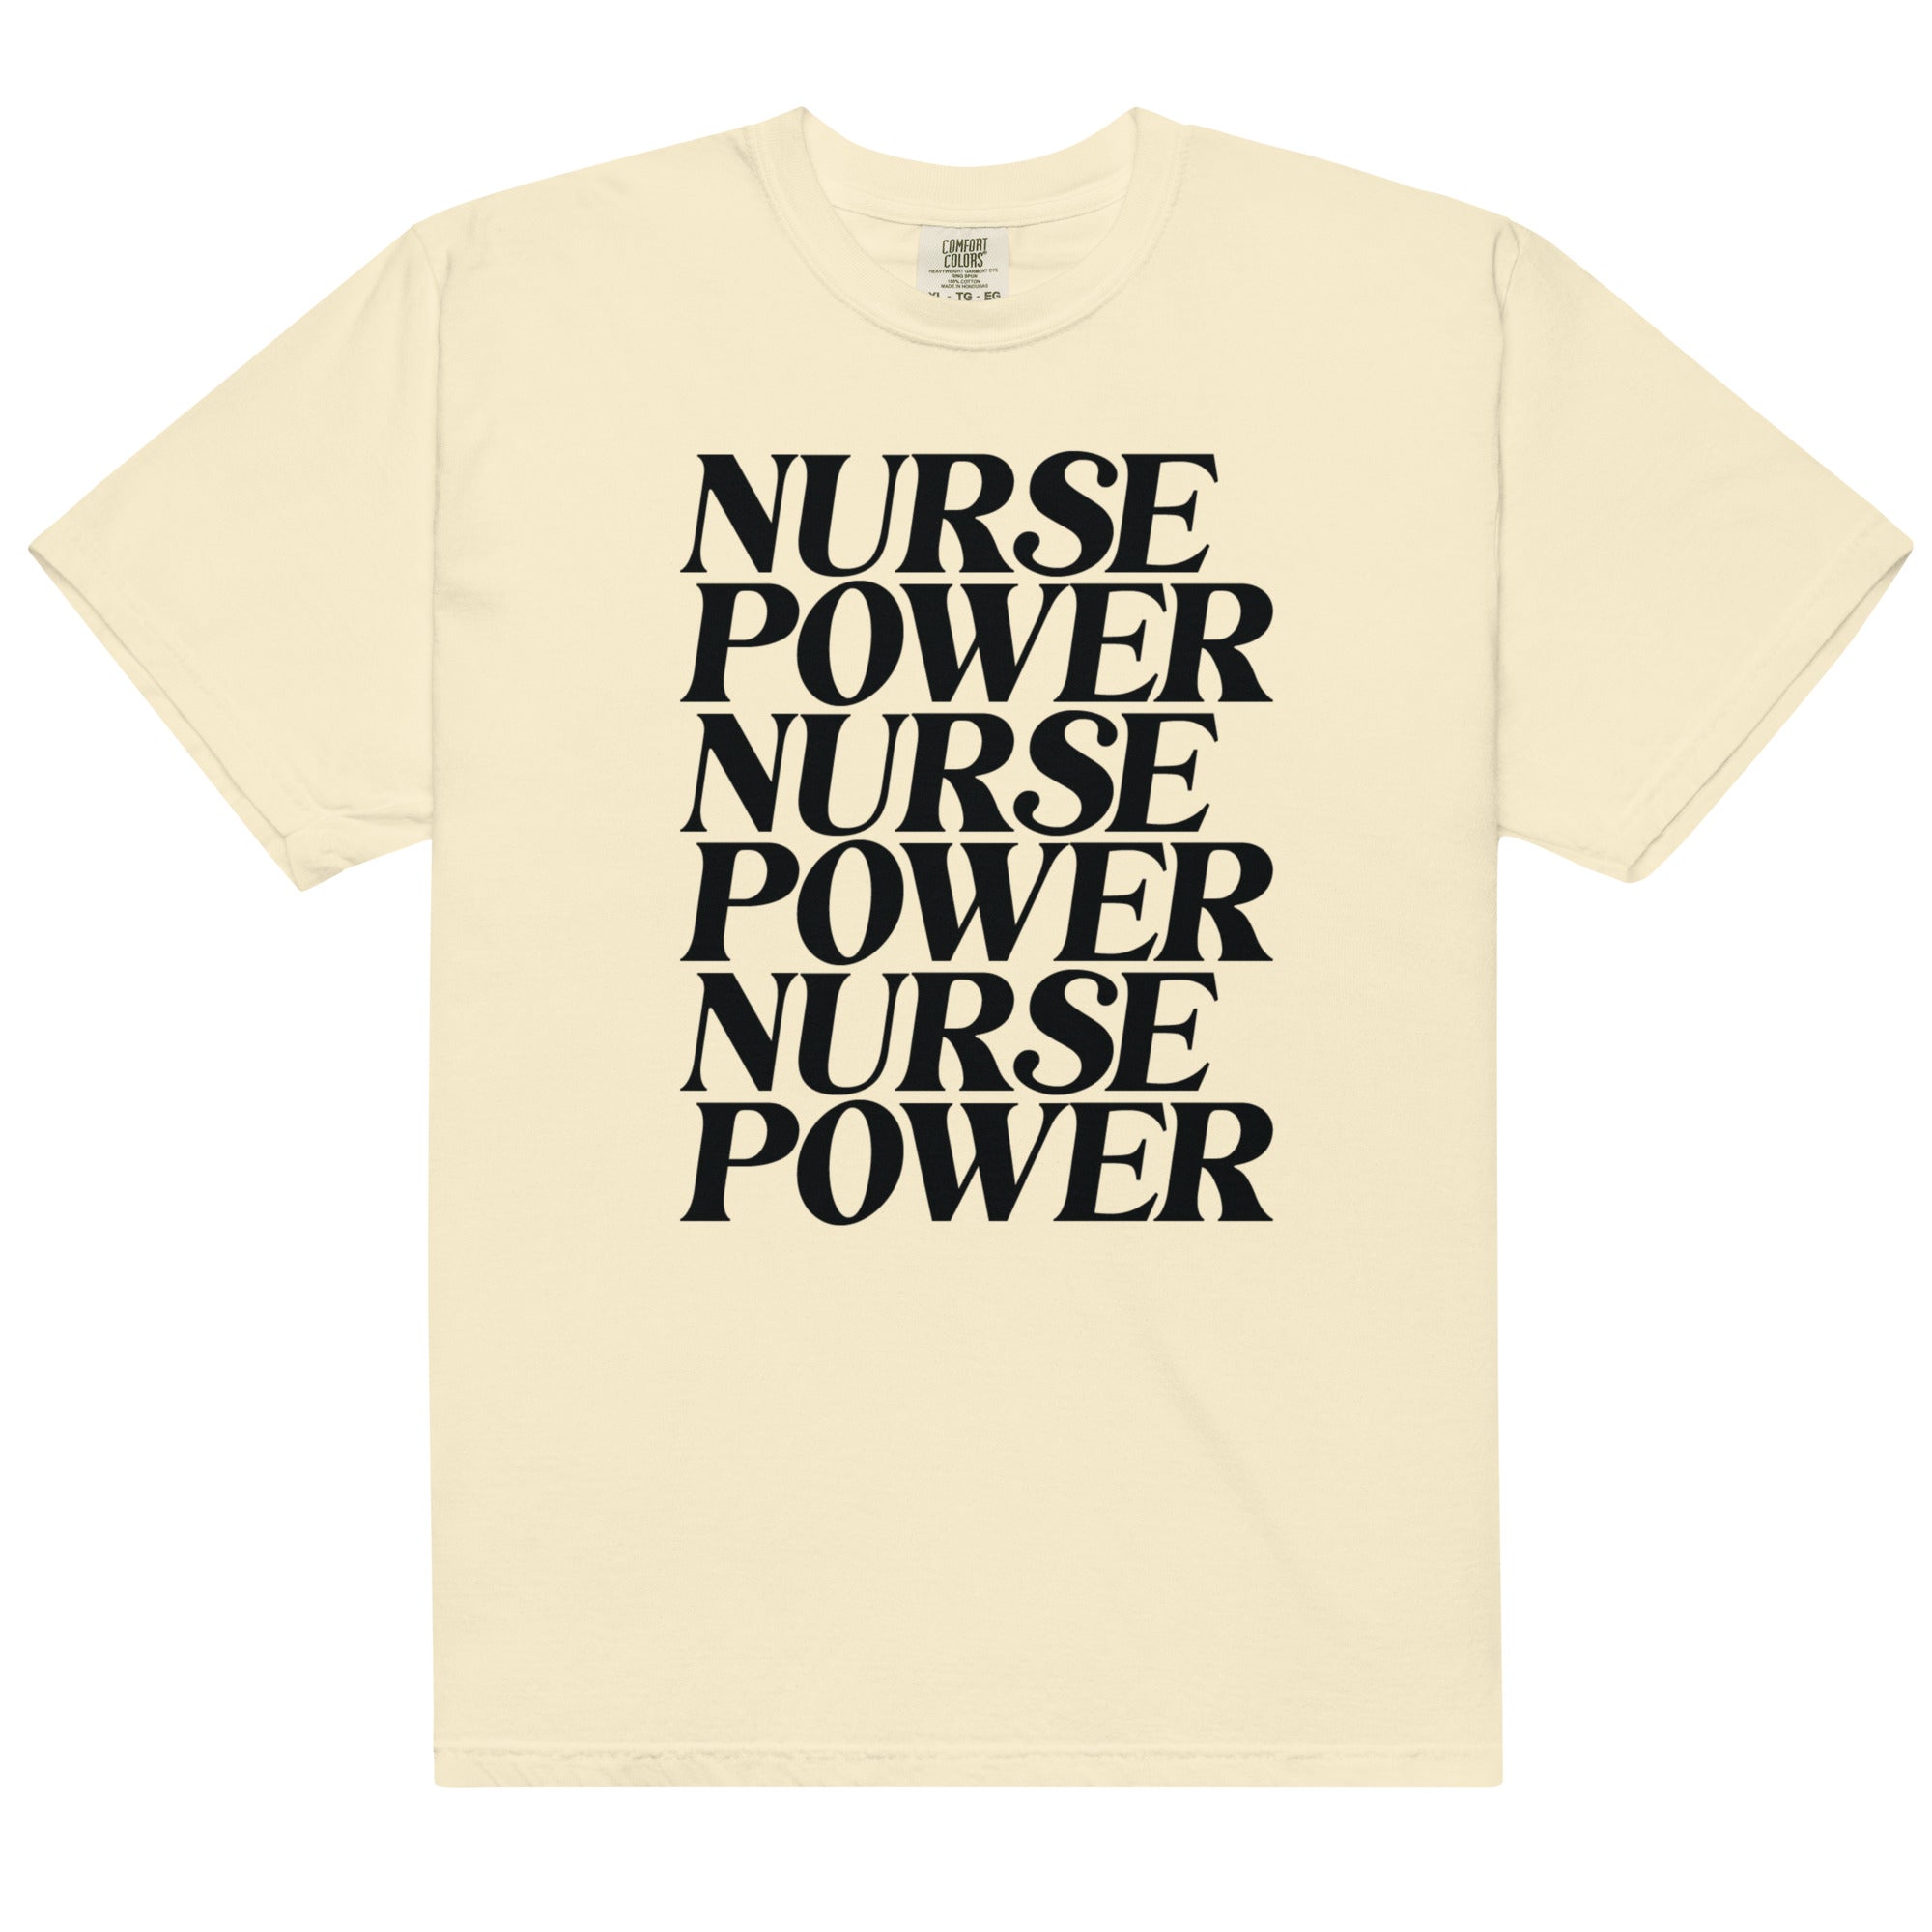 Nurse Power Tee - Black